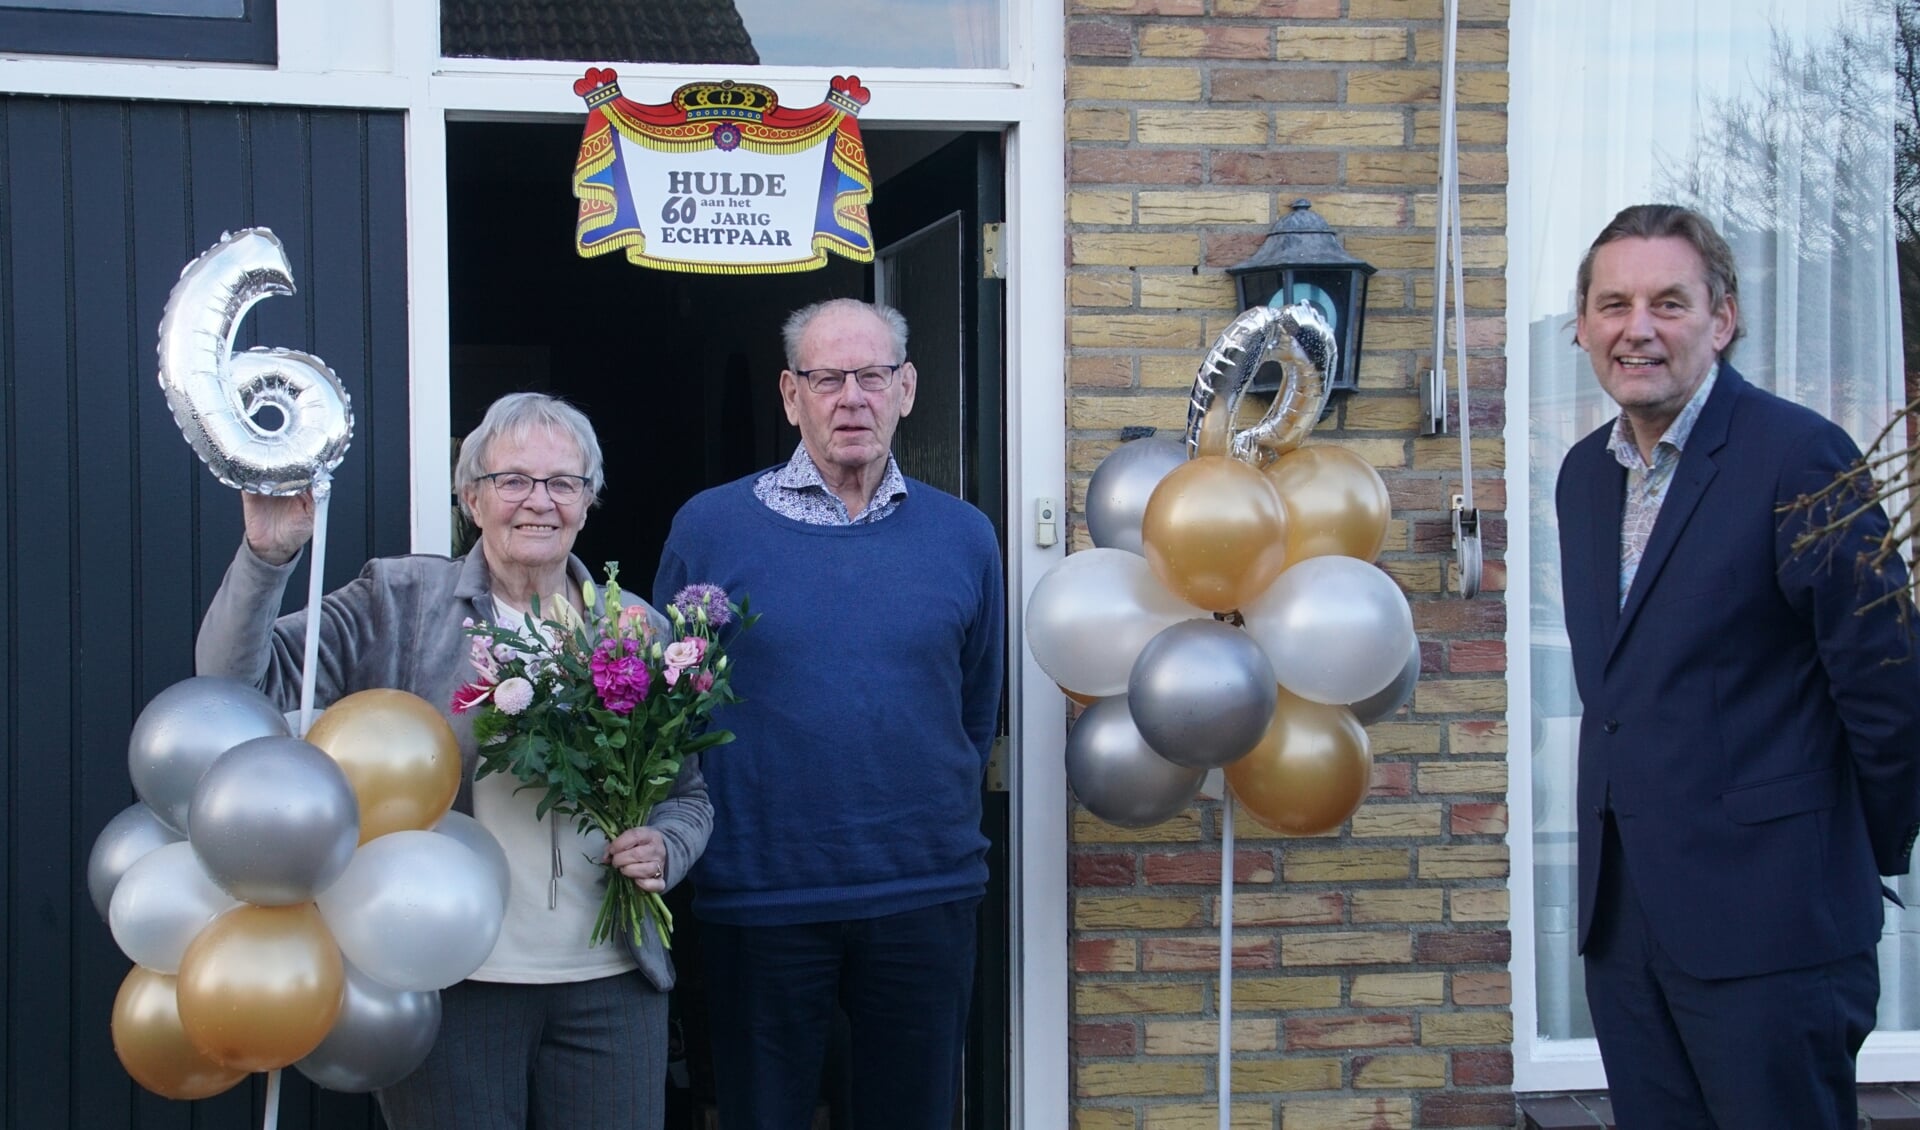 Echtpaar Ruesink-Dolfin met burgemeester Stapelkamp. Foto: Frank Vinkenvleugel